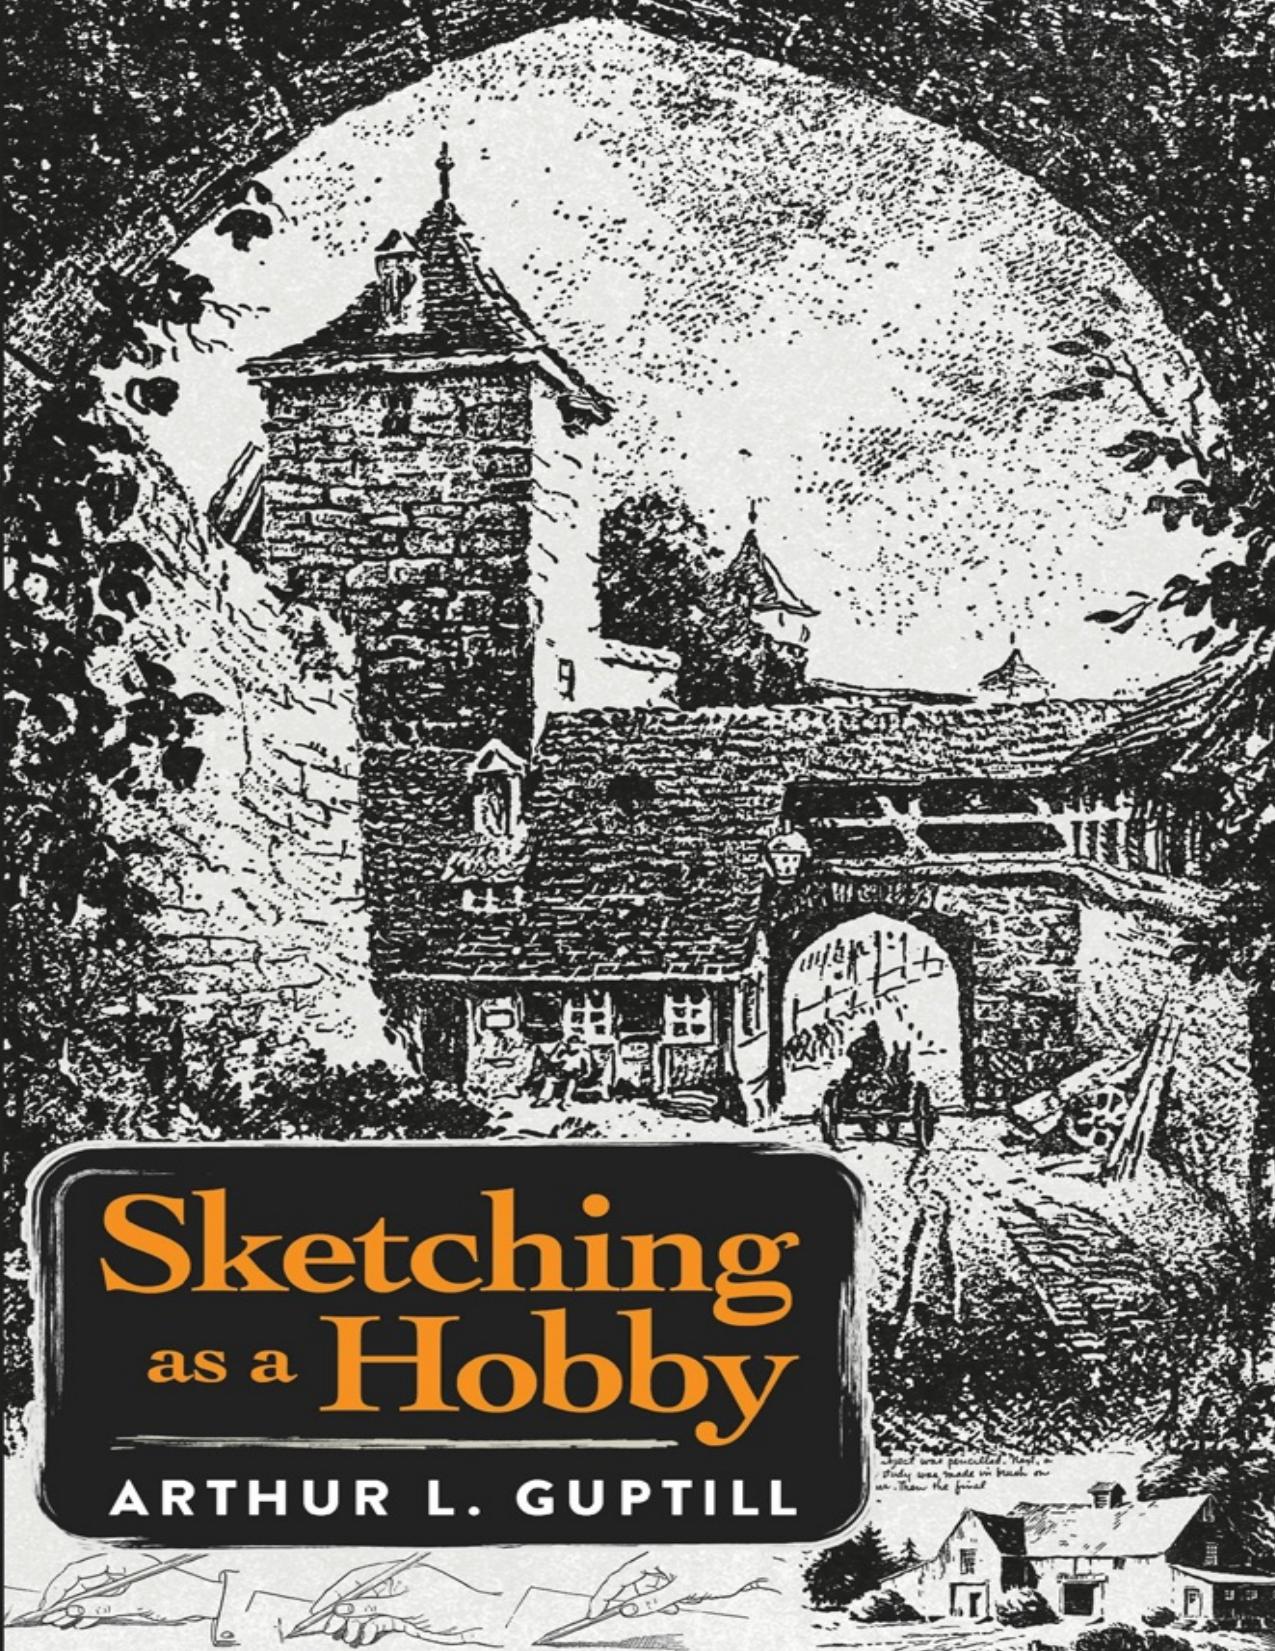 Sketching as a Hobby - PDFDrive.com